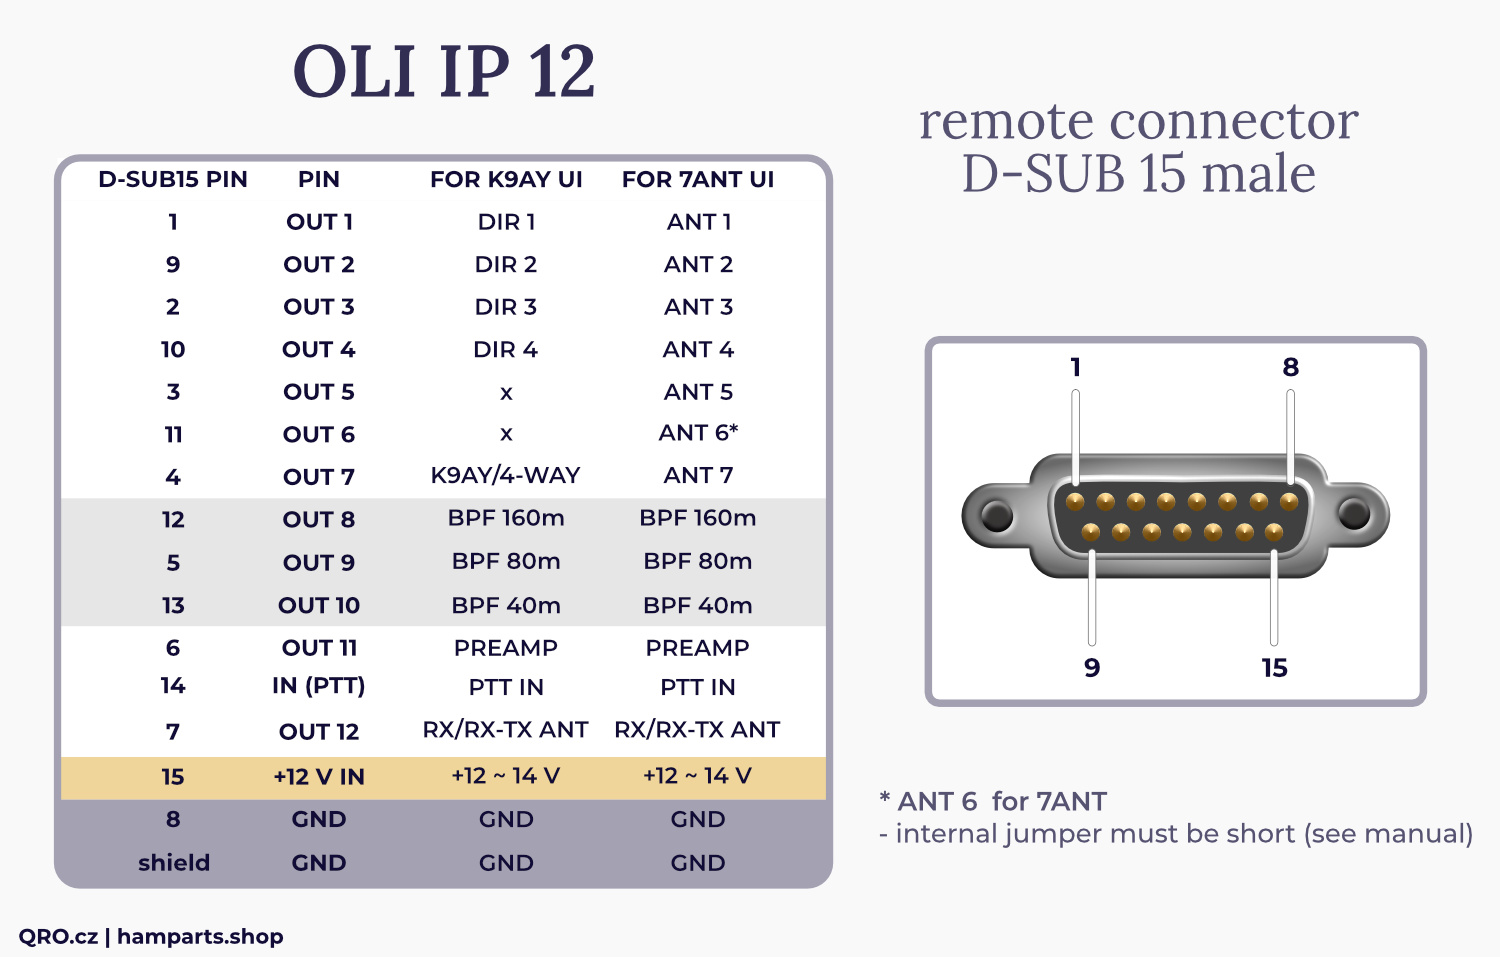 oli ip 12 connector db15 male qro.cz hamparts.shop